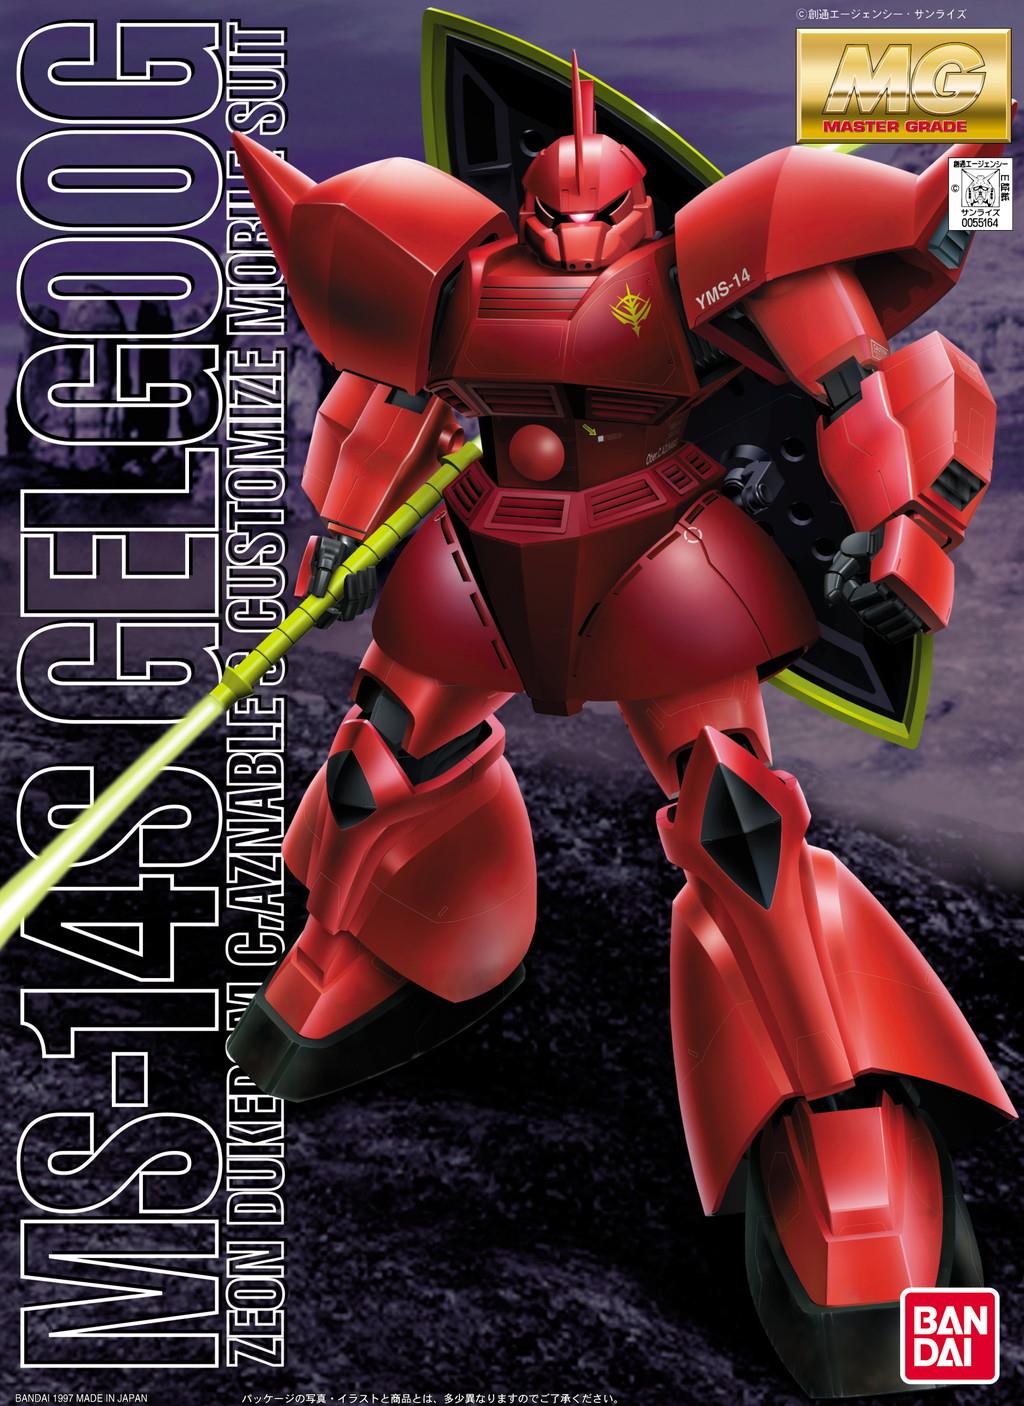 Gundam: Char's Gelgoog MG Model